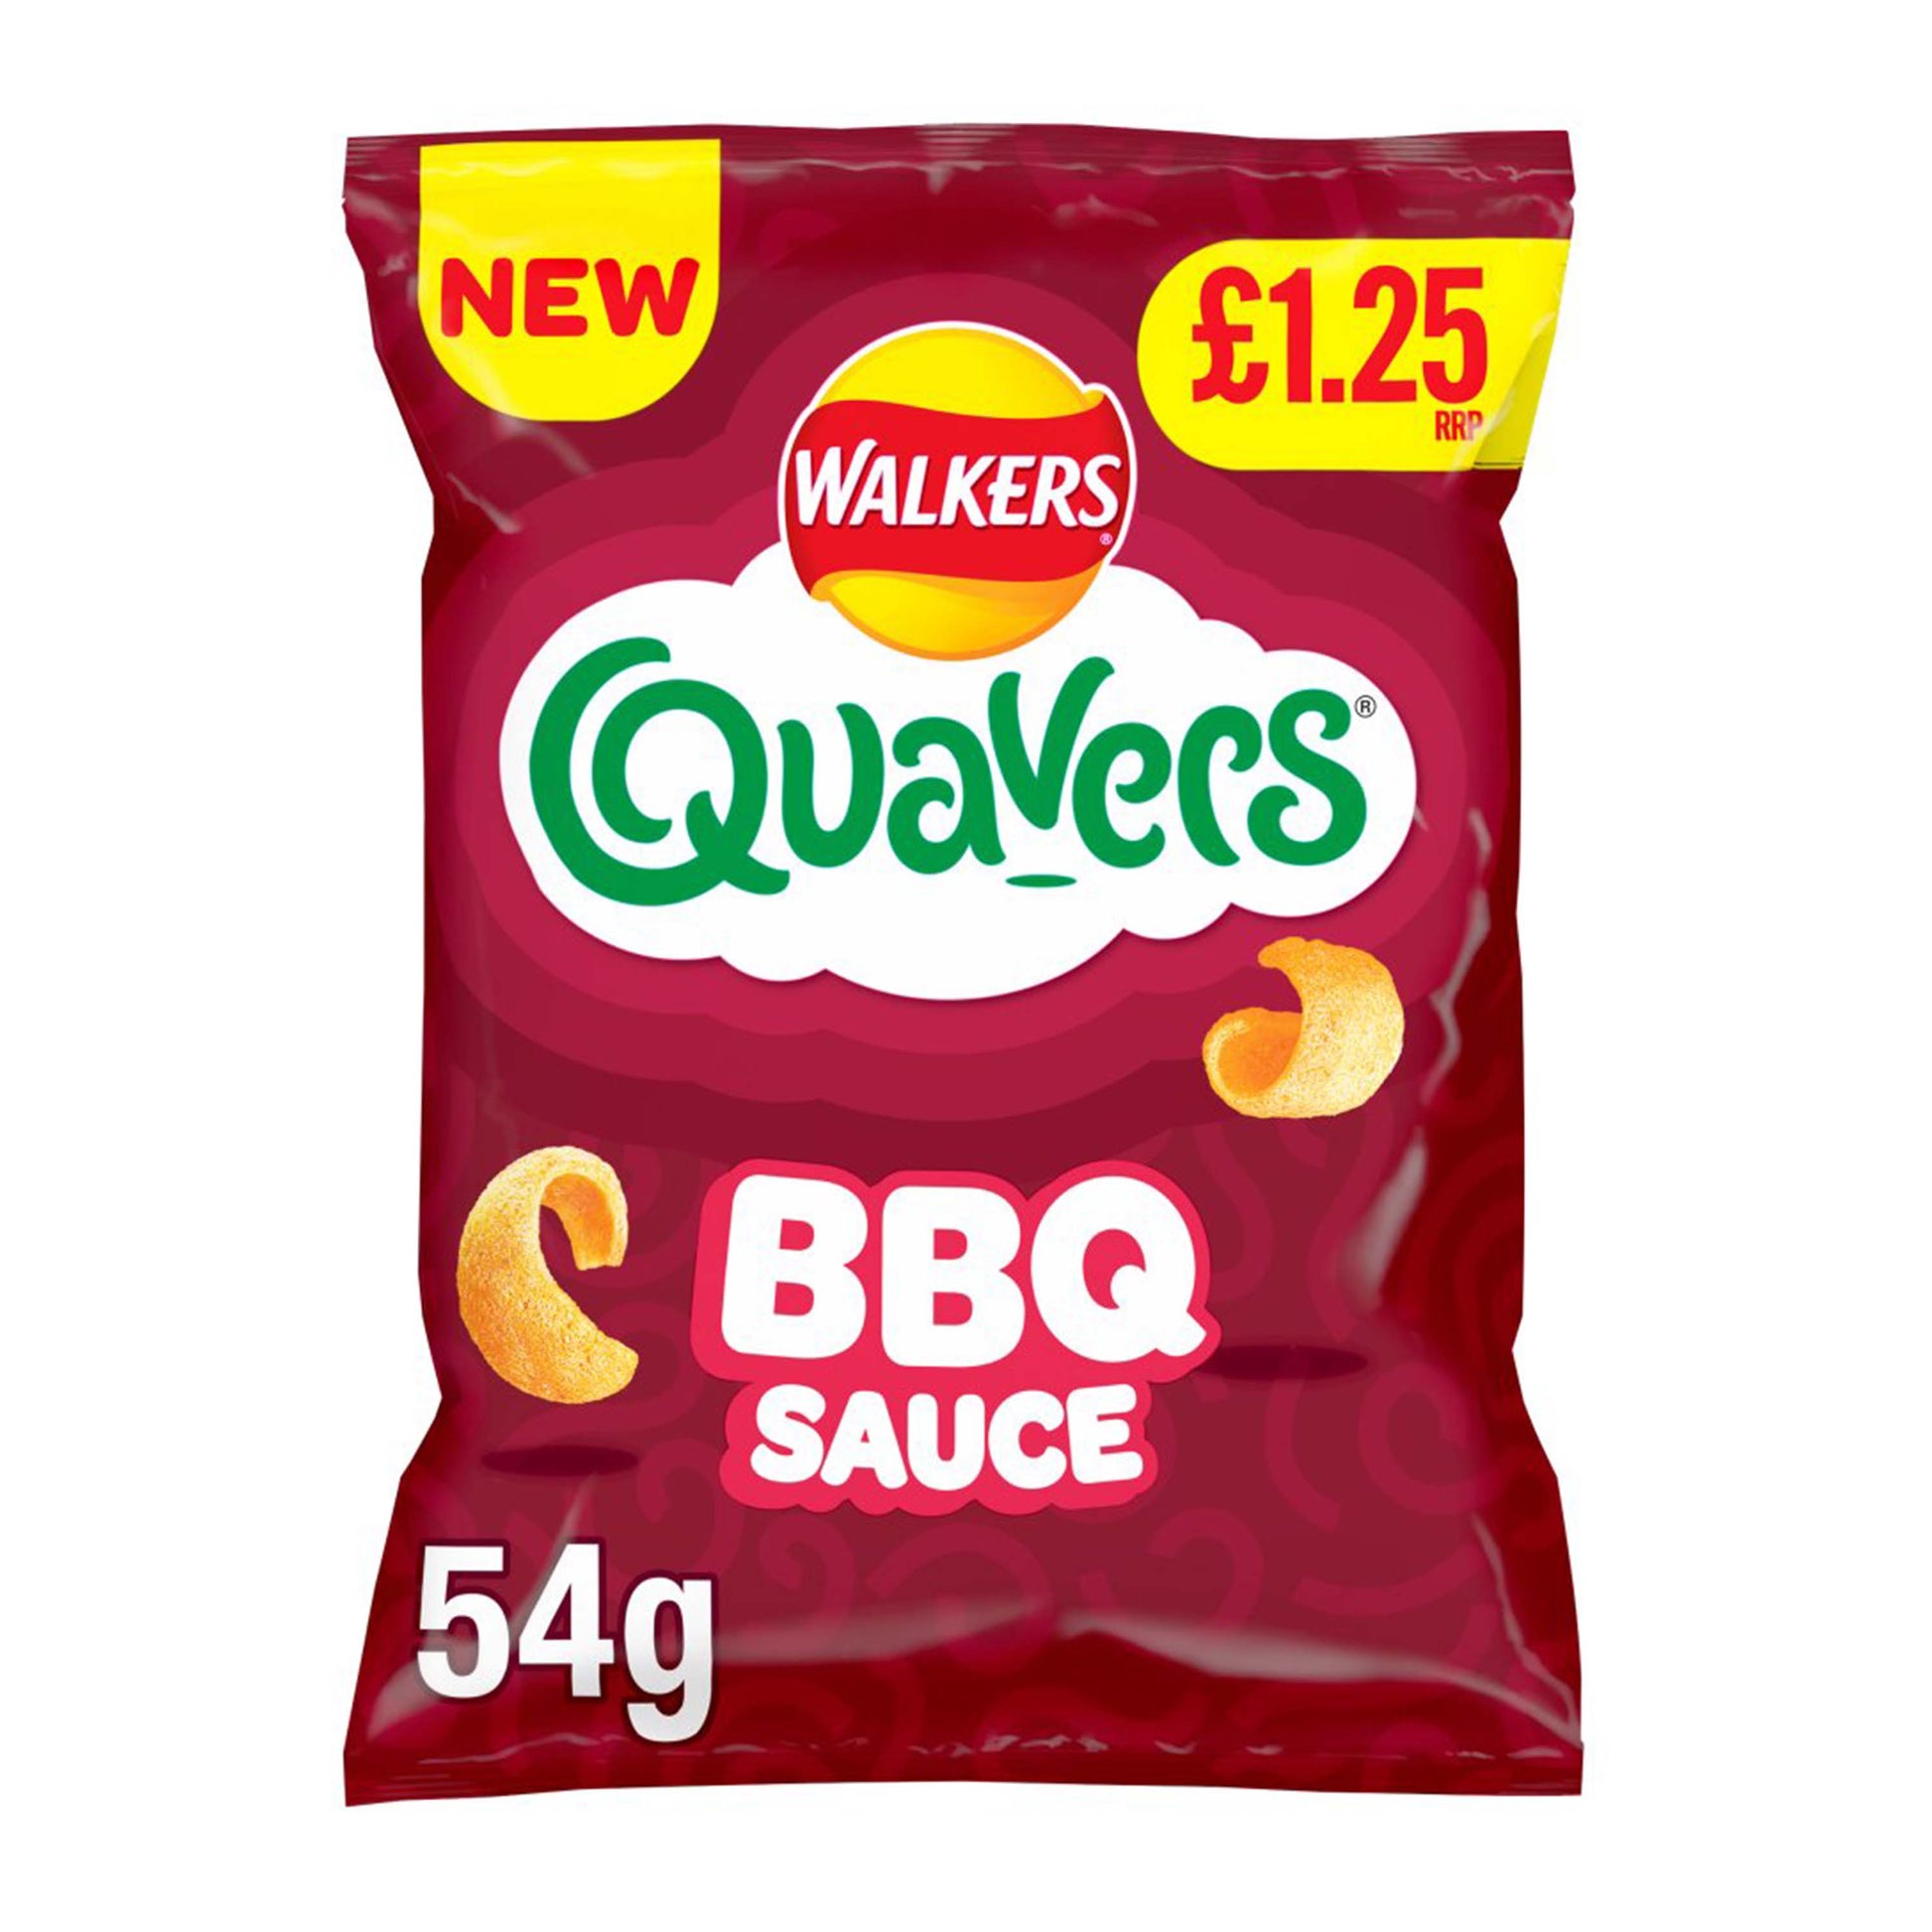 Walkers Quavers BBQ Sauce Snacks Crisps 54g – (£1.25 Bag) - British Snacks